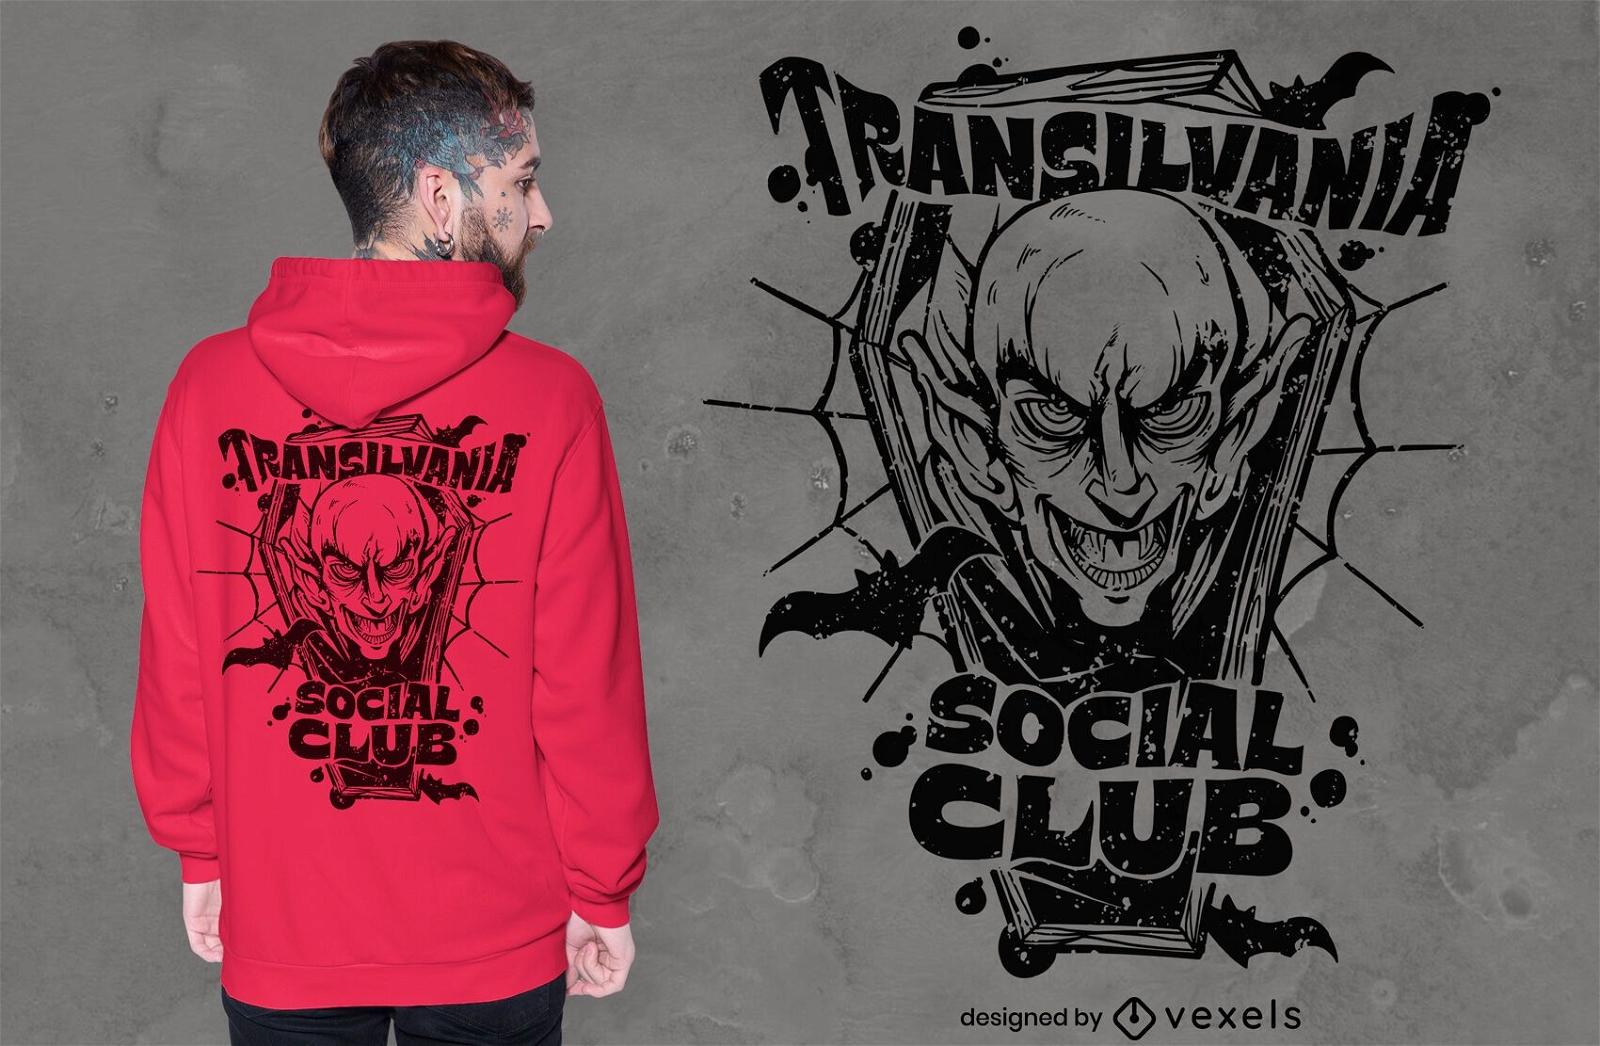 Dise?o de camiseta del club social de Transilvania.